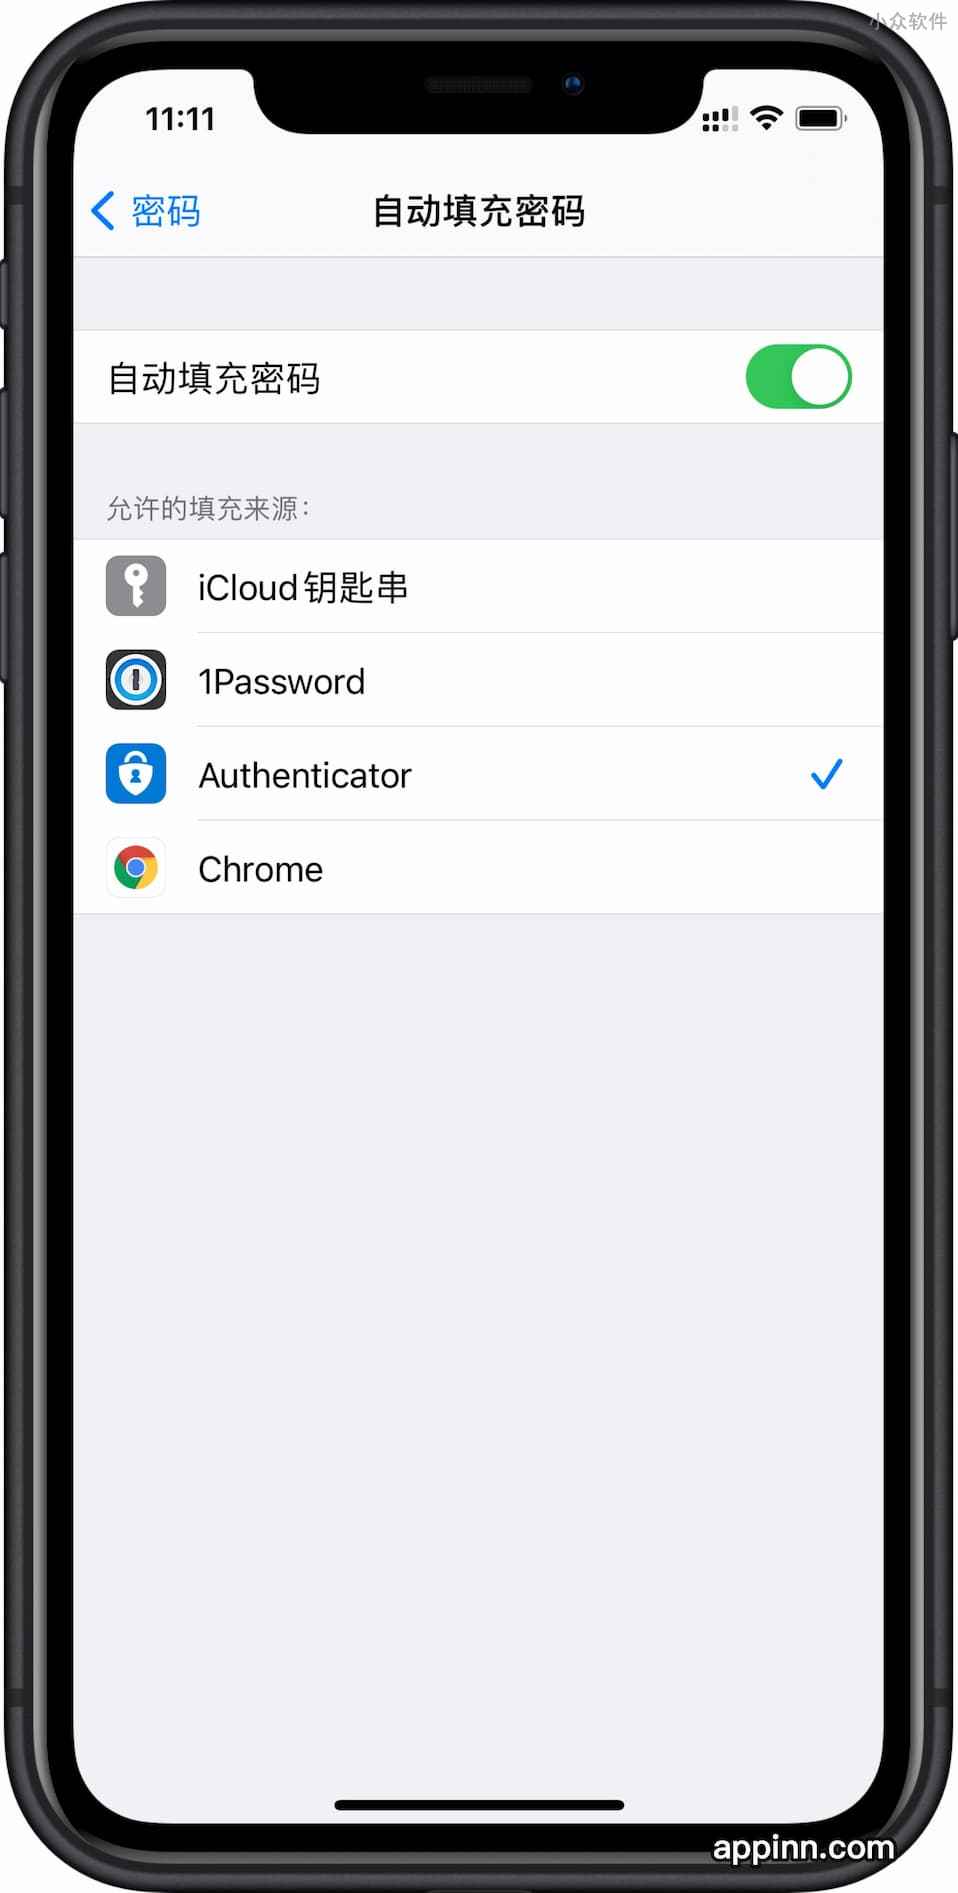 Microsoft Authenticator 密码管理器 - 从 Edge 同步密码，支持在 iPhone、Android 设备及 Chrome 中自动填充密码 3